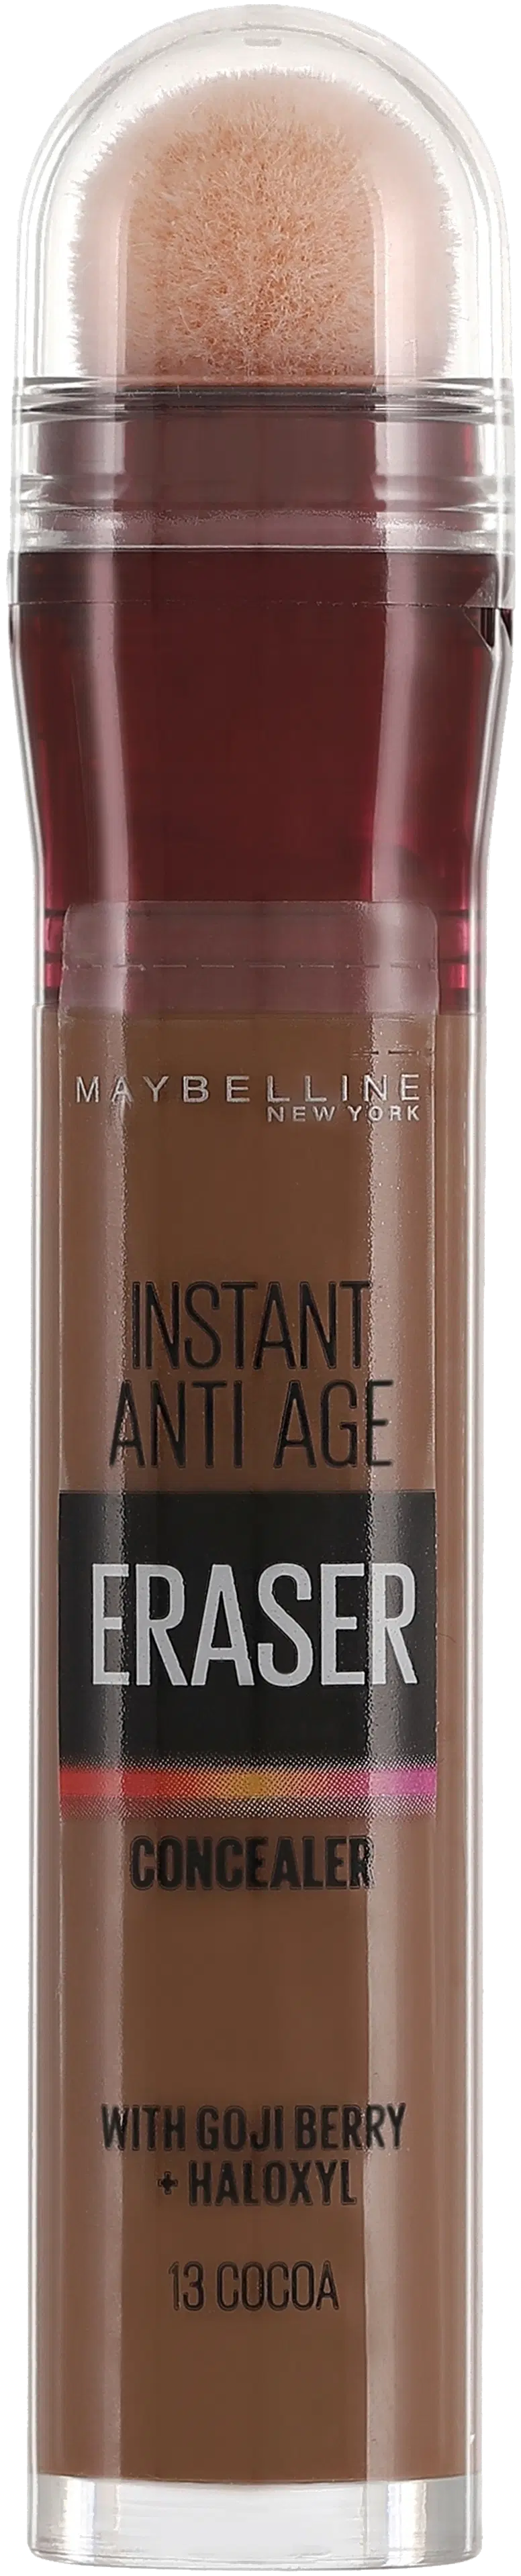 Maybelline New York Instant Anti Age Eraser 13 Cocoa peitevoide 6,8ml